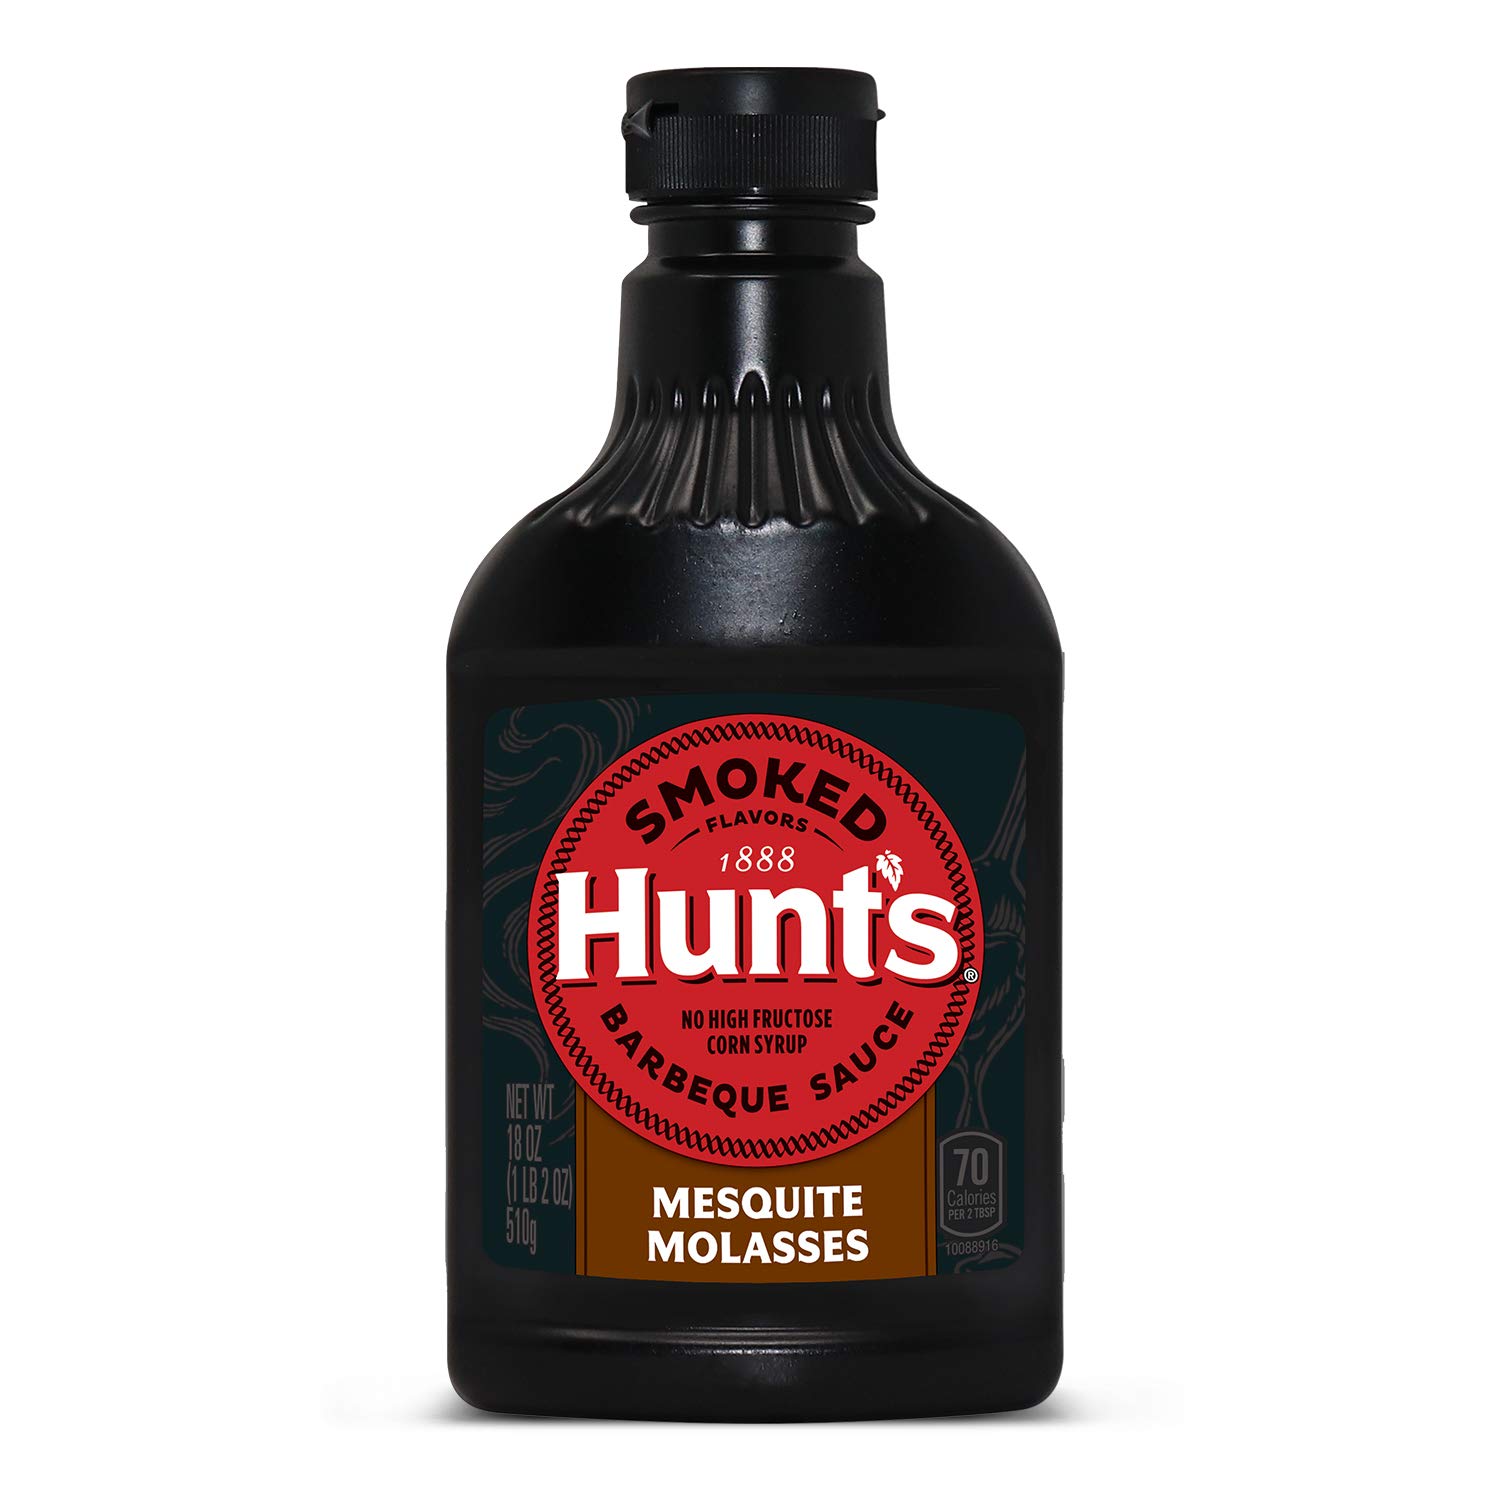 Hunts BBQ Sauce Sweet Mesquite Molasses 18oz